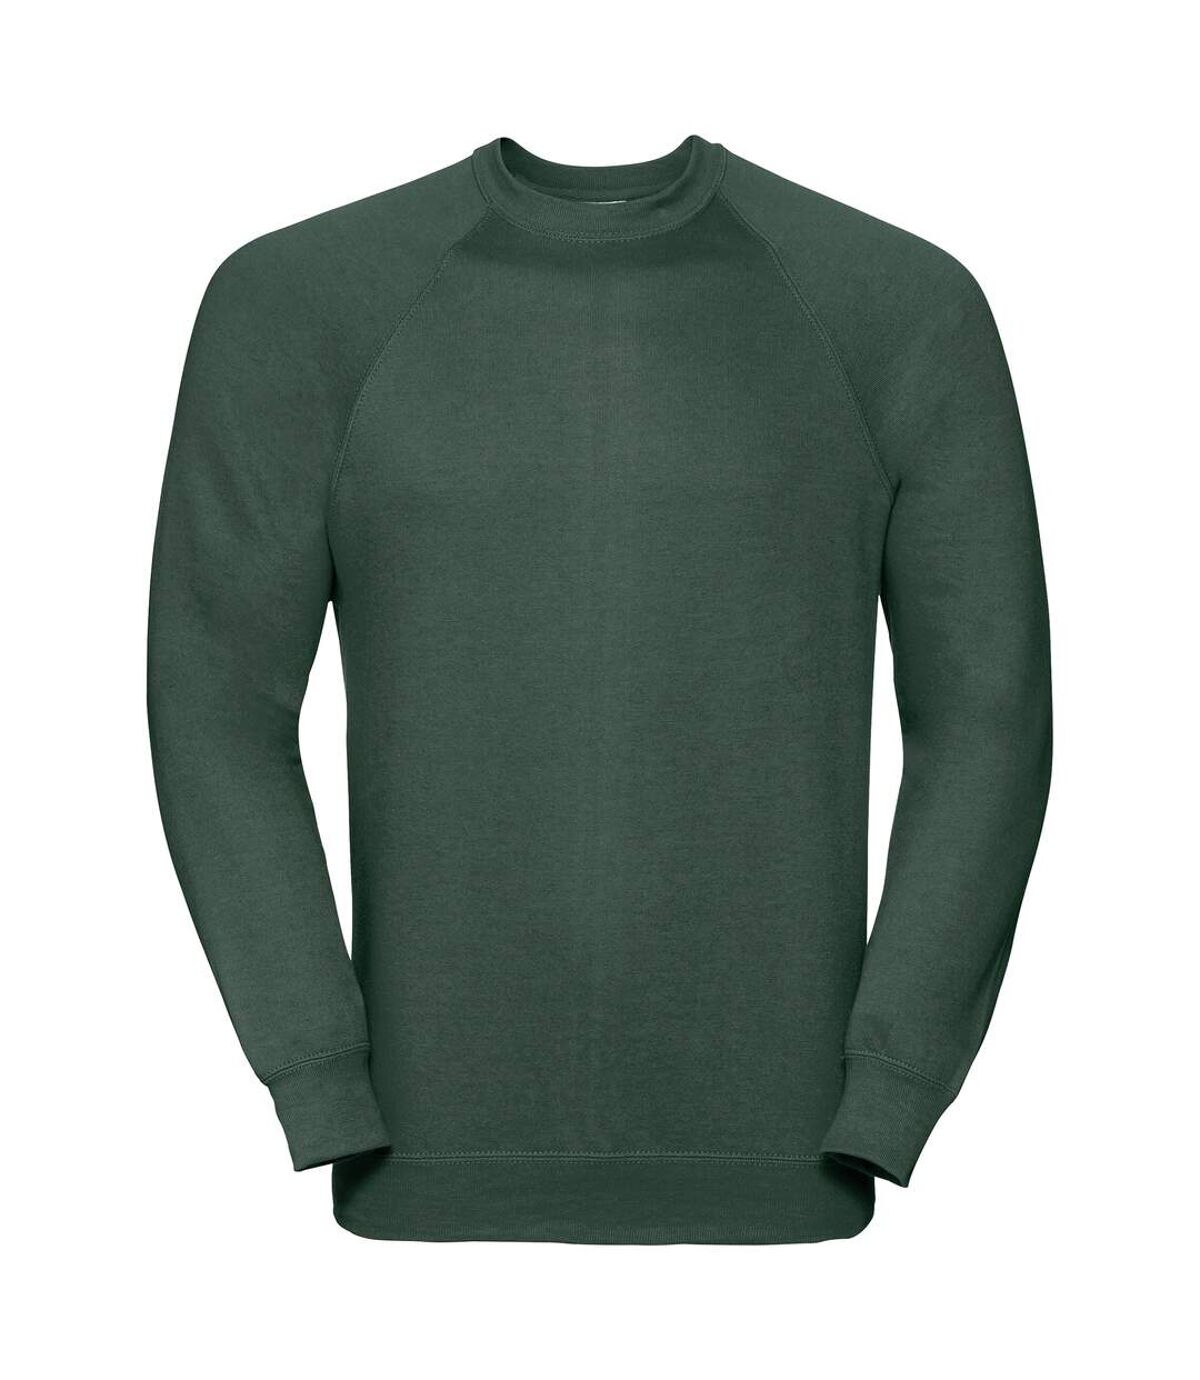 Russell Jerzees Colors Classic Sweatshirt (Bottle Green) - UTBC573